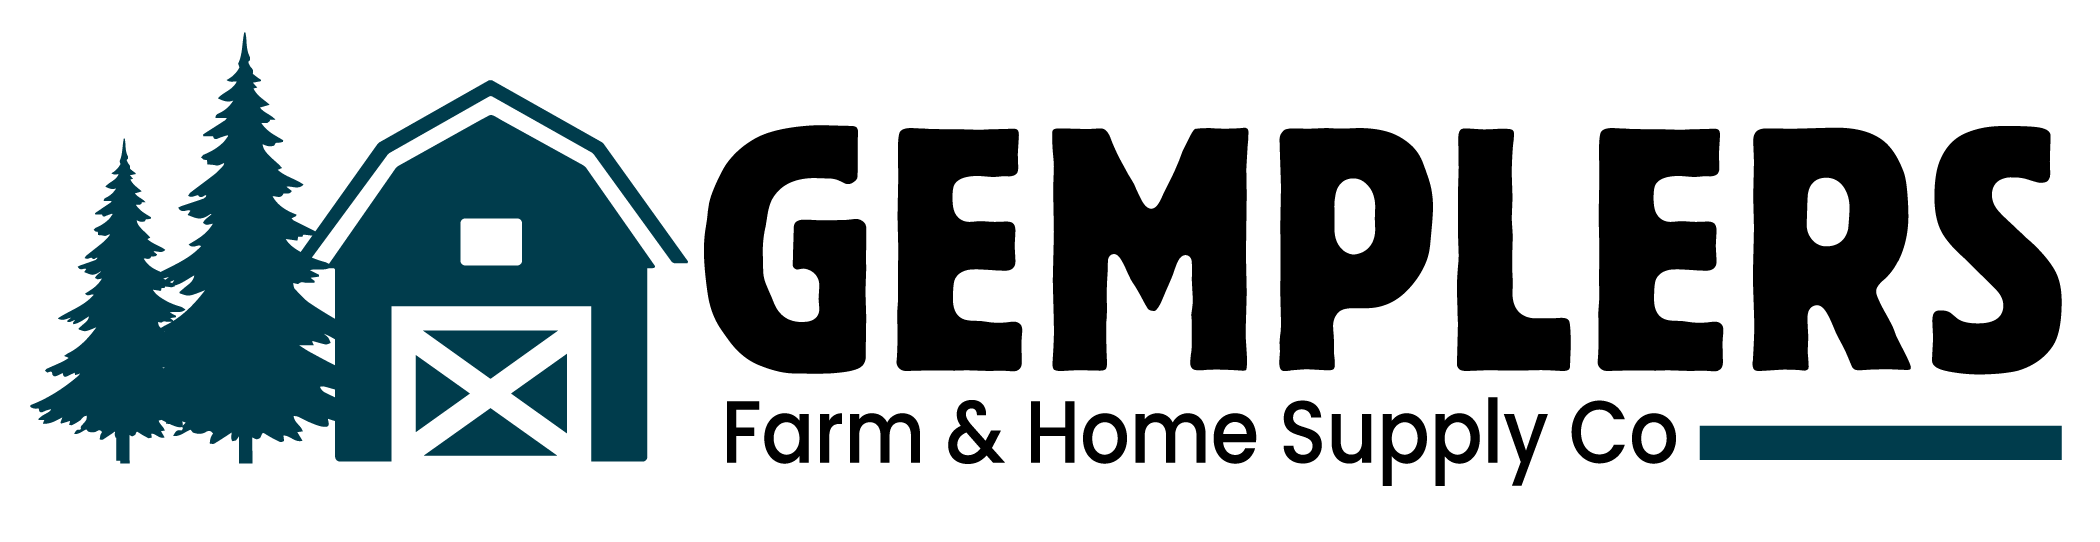 Gempler's logo horizontal Image